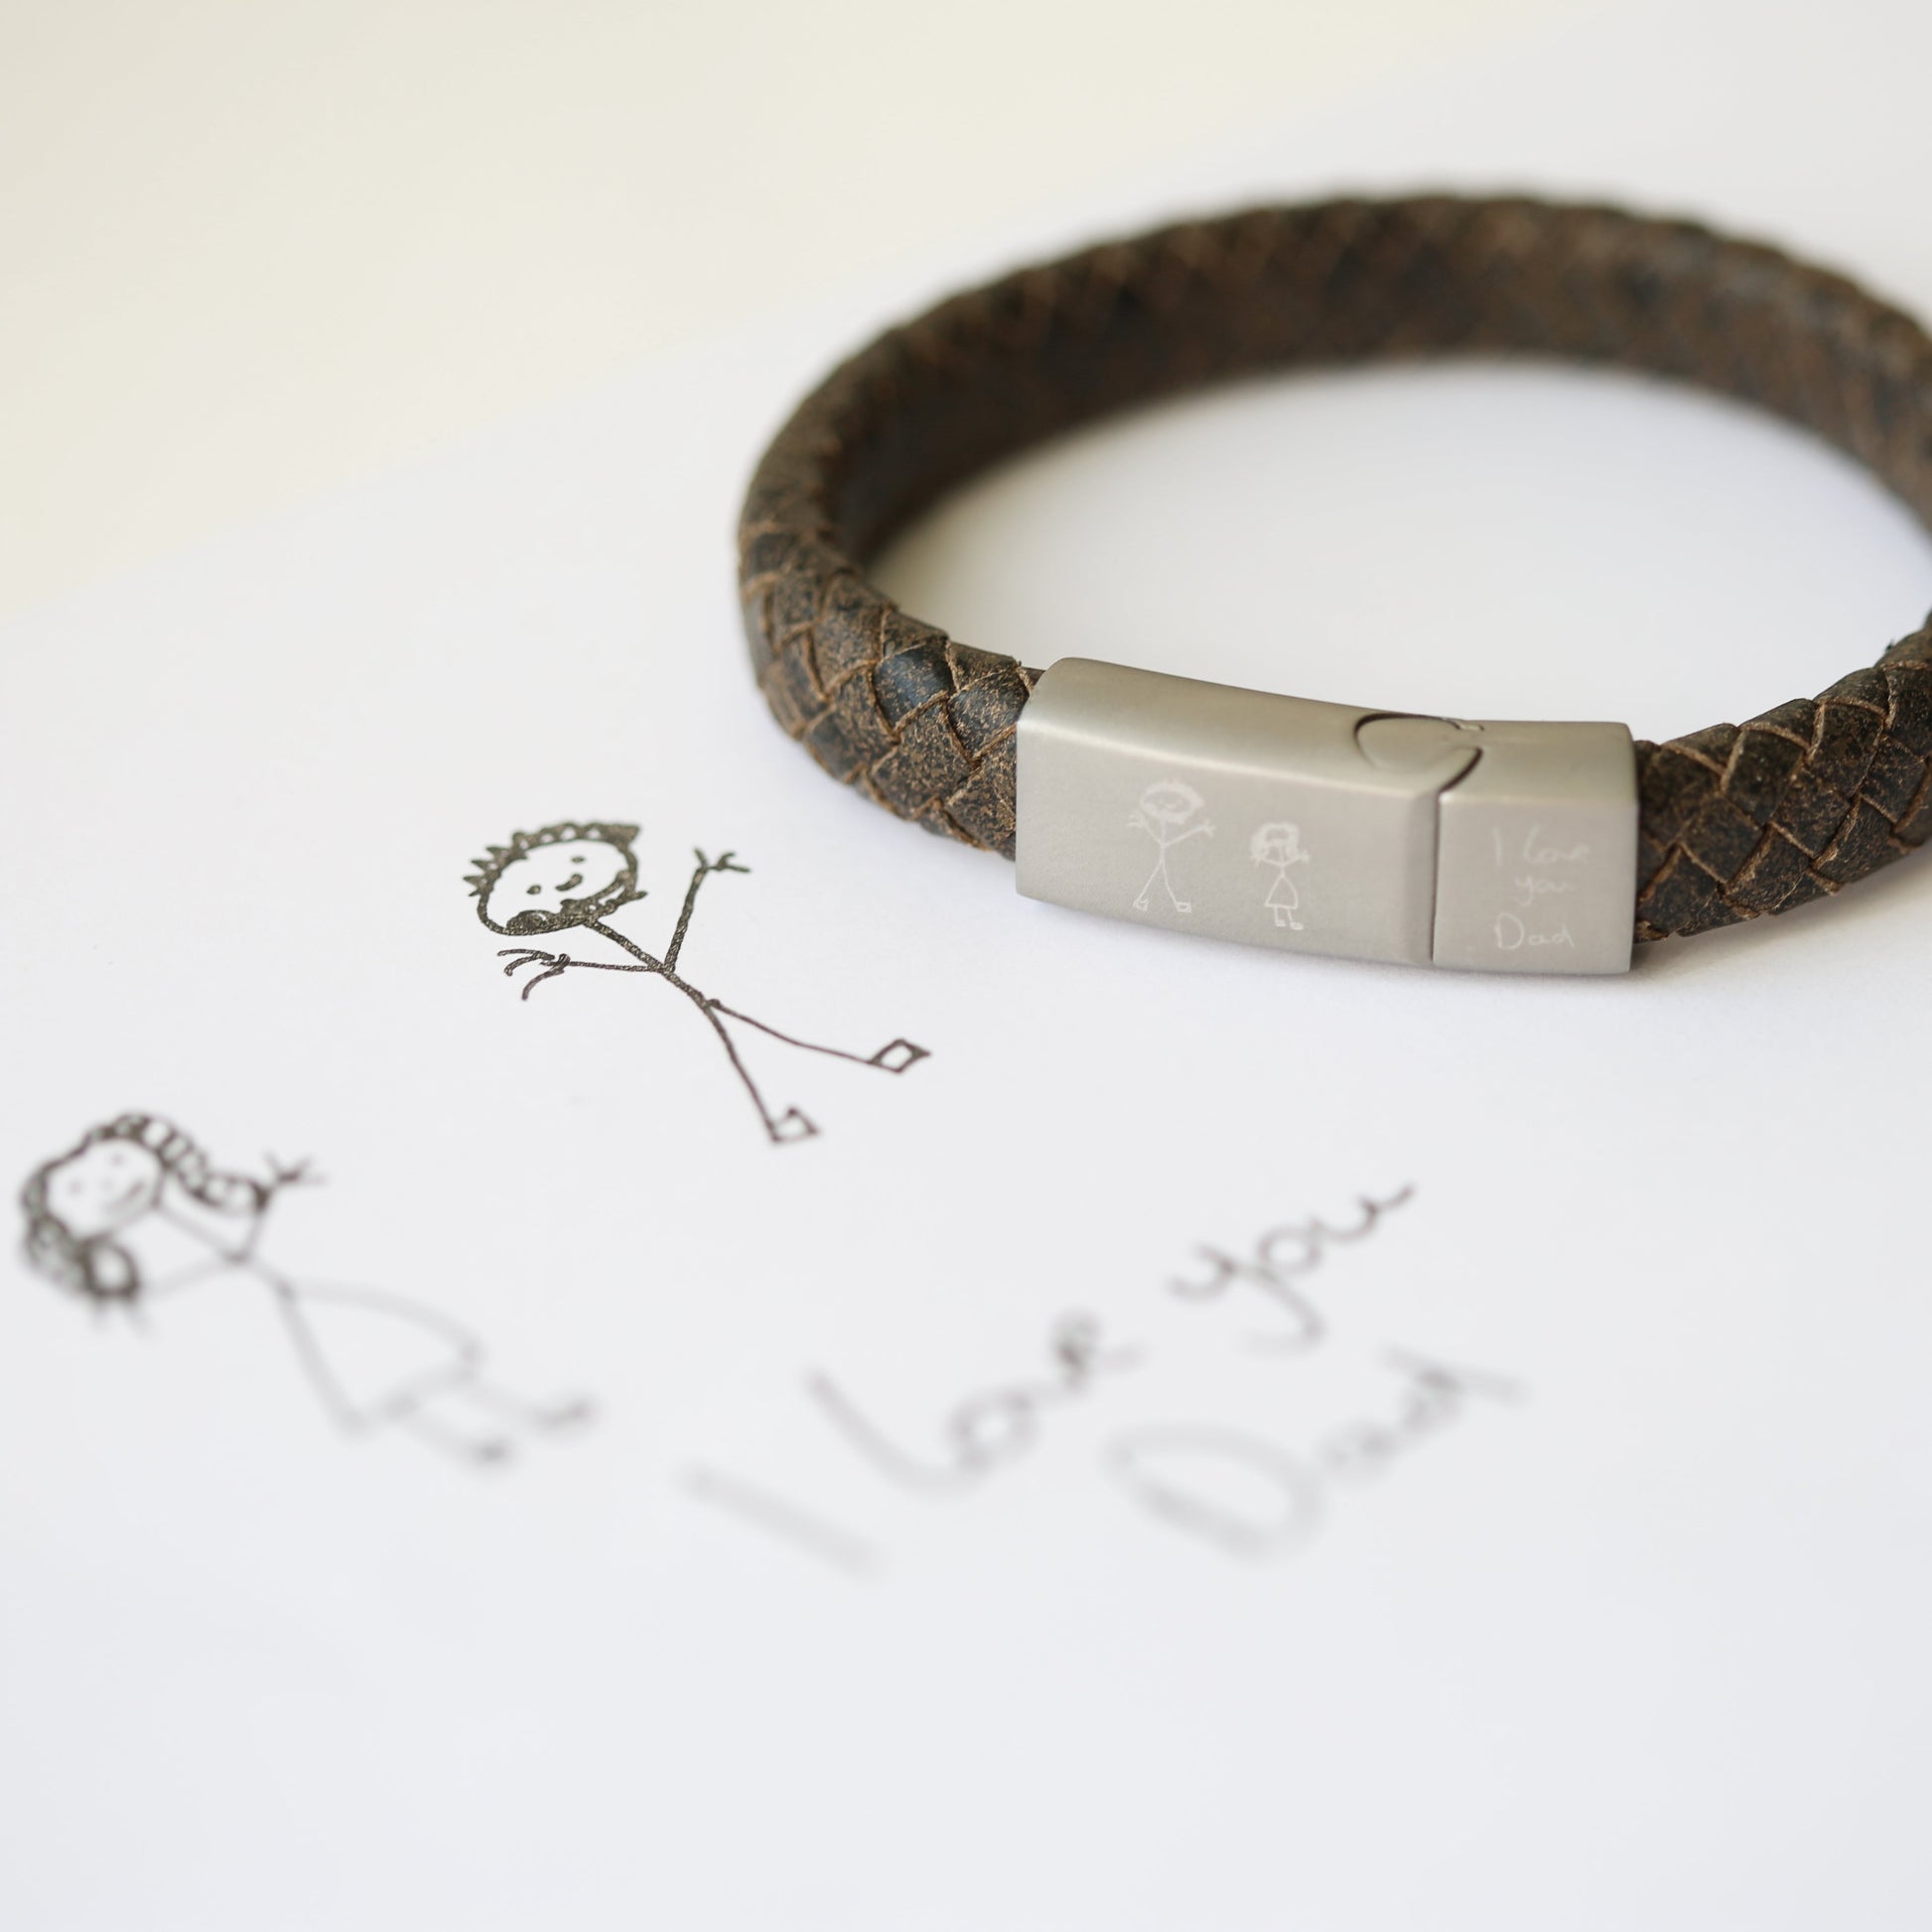 Personalized Men's Bracelets - Handwriting Engraved Antique Style Bracelet - Rustic 